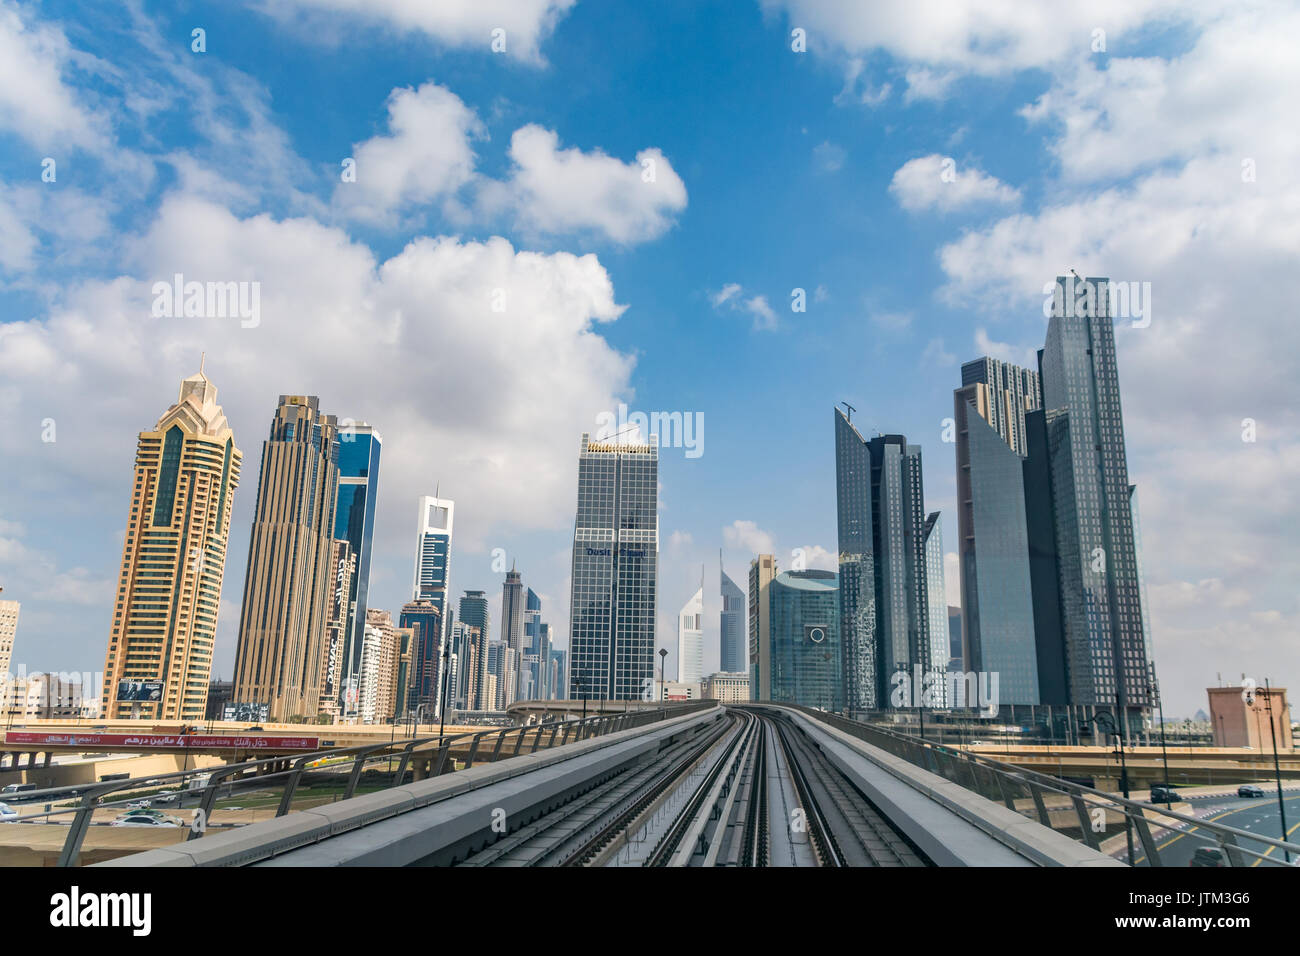 Cityscape of Dubai, view from the Dubai metro, United Arab Emirates Stock Photo